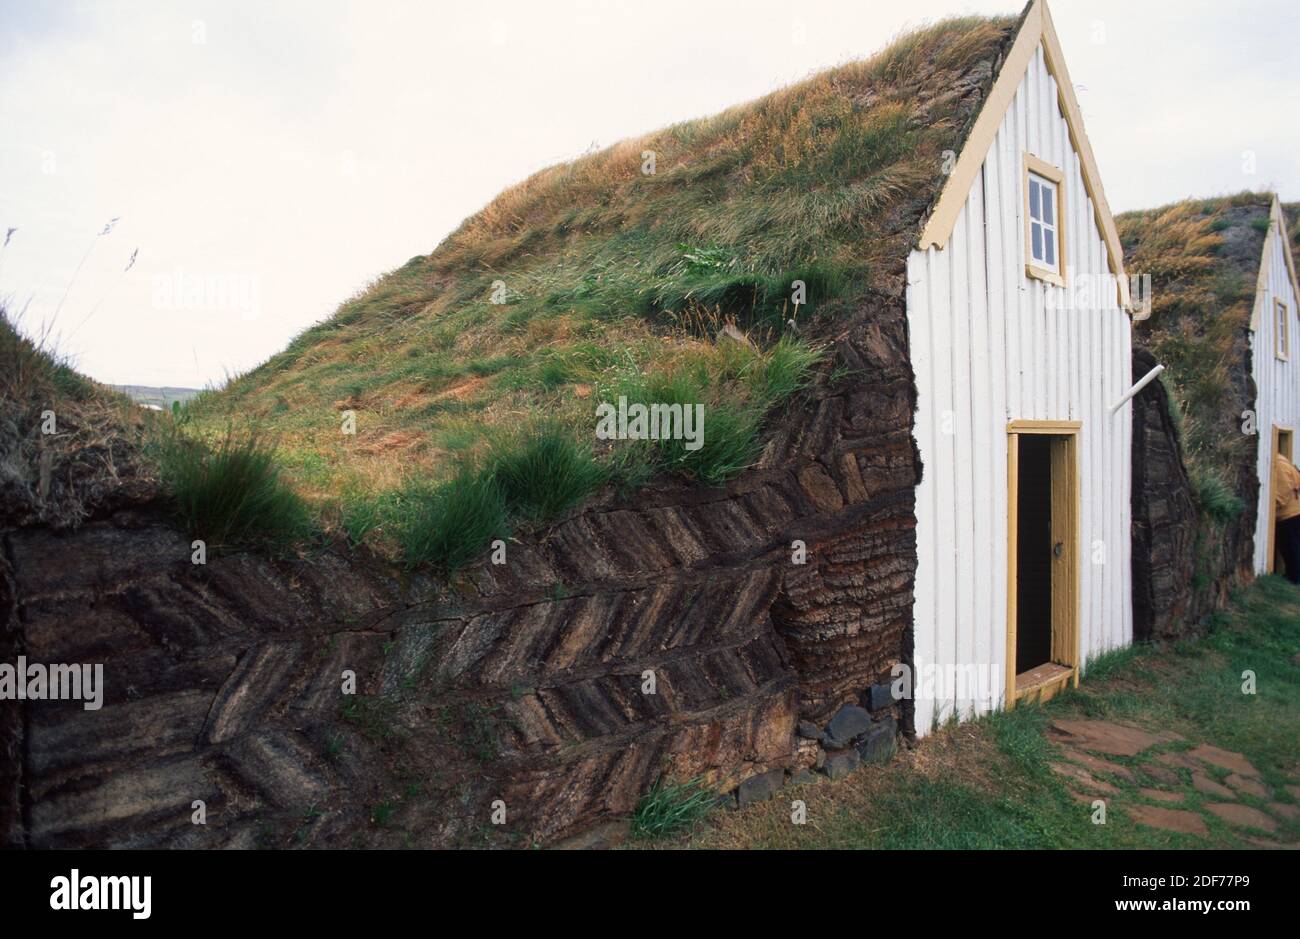 Turba utilizada como material aislante tradicional de construcción en Islandia. Foto de stock